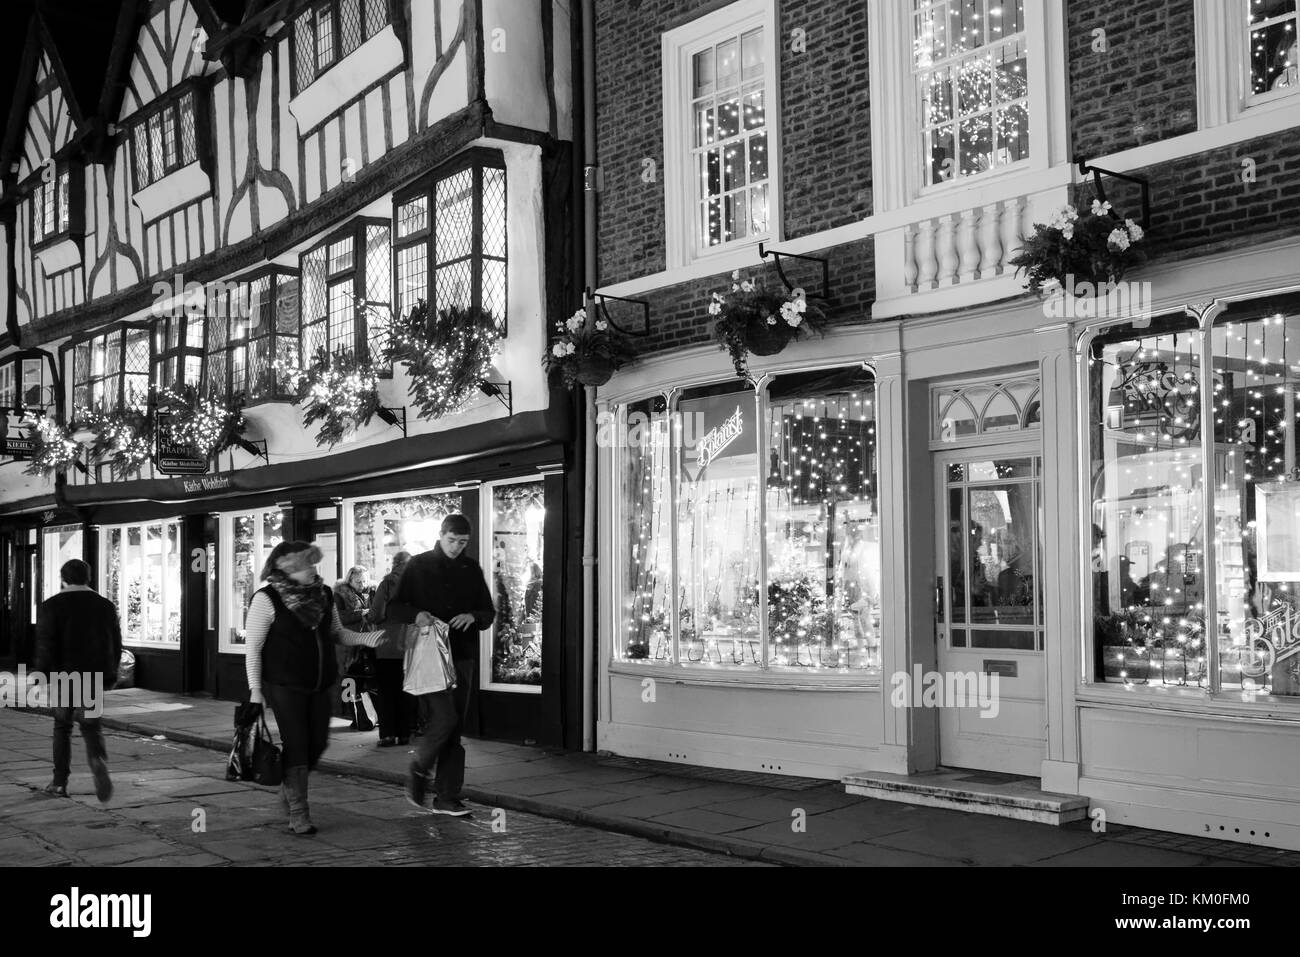 Sparkling Christmas lights along the ancient street, Stonegate, York, UK Stock Photo